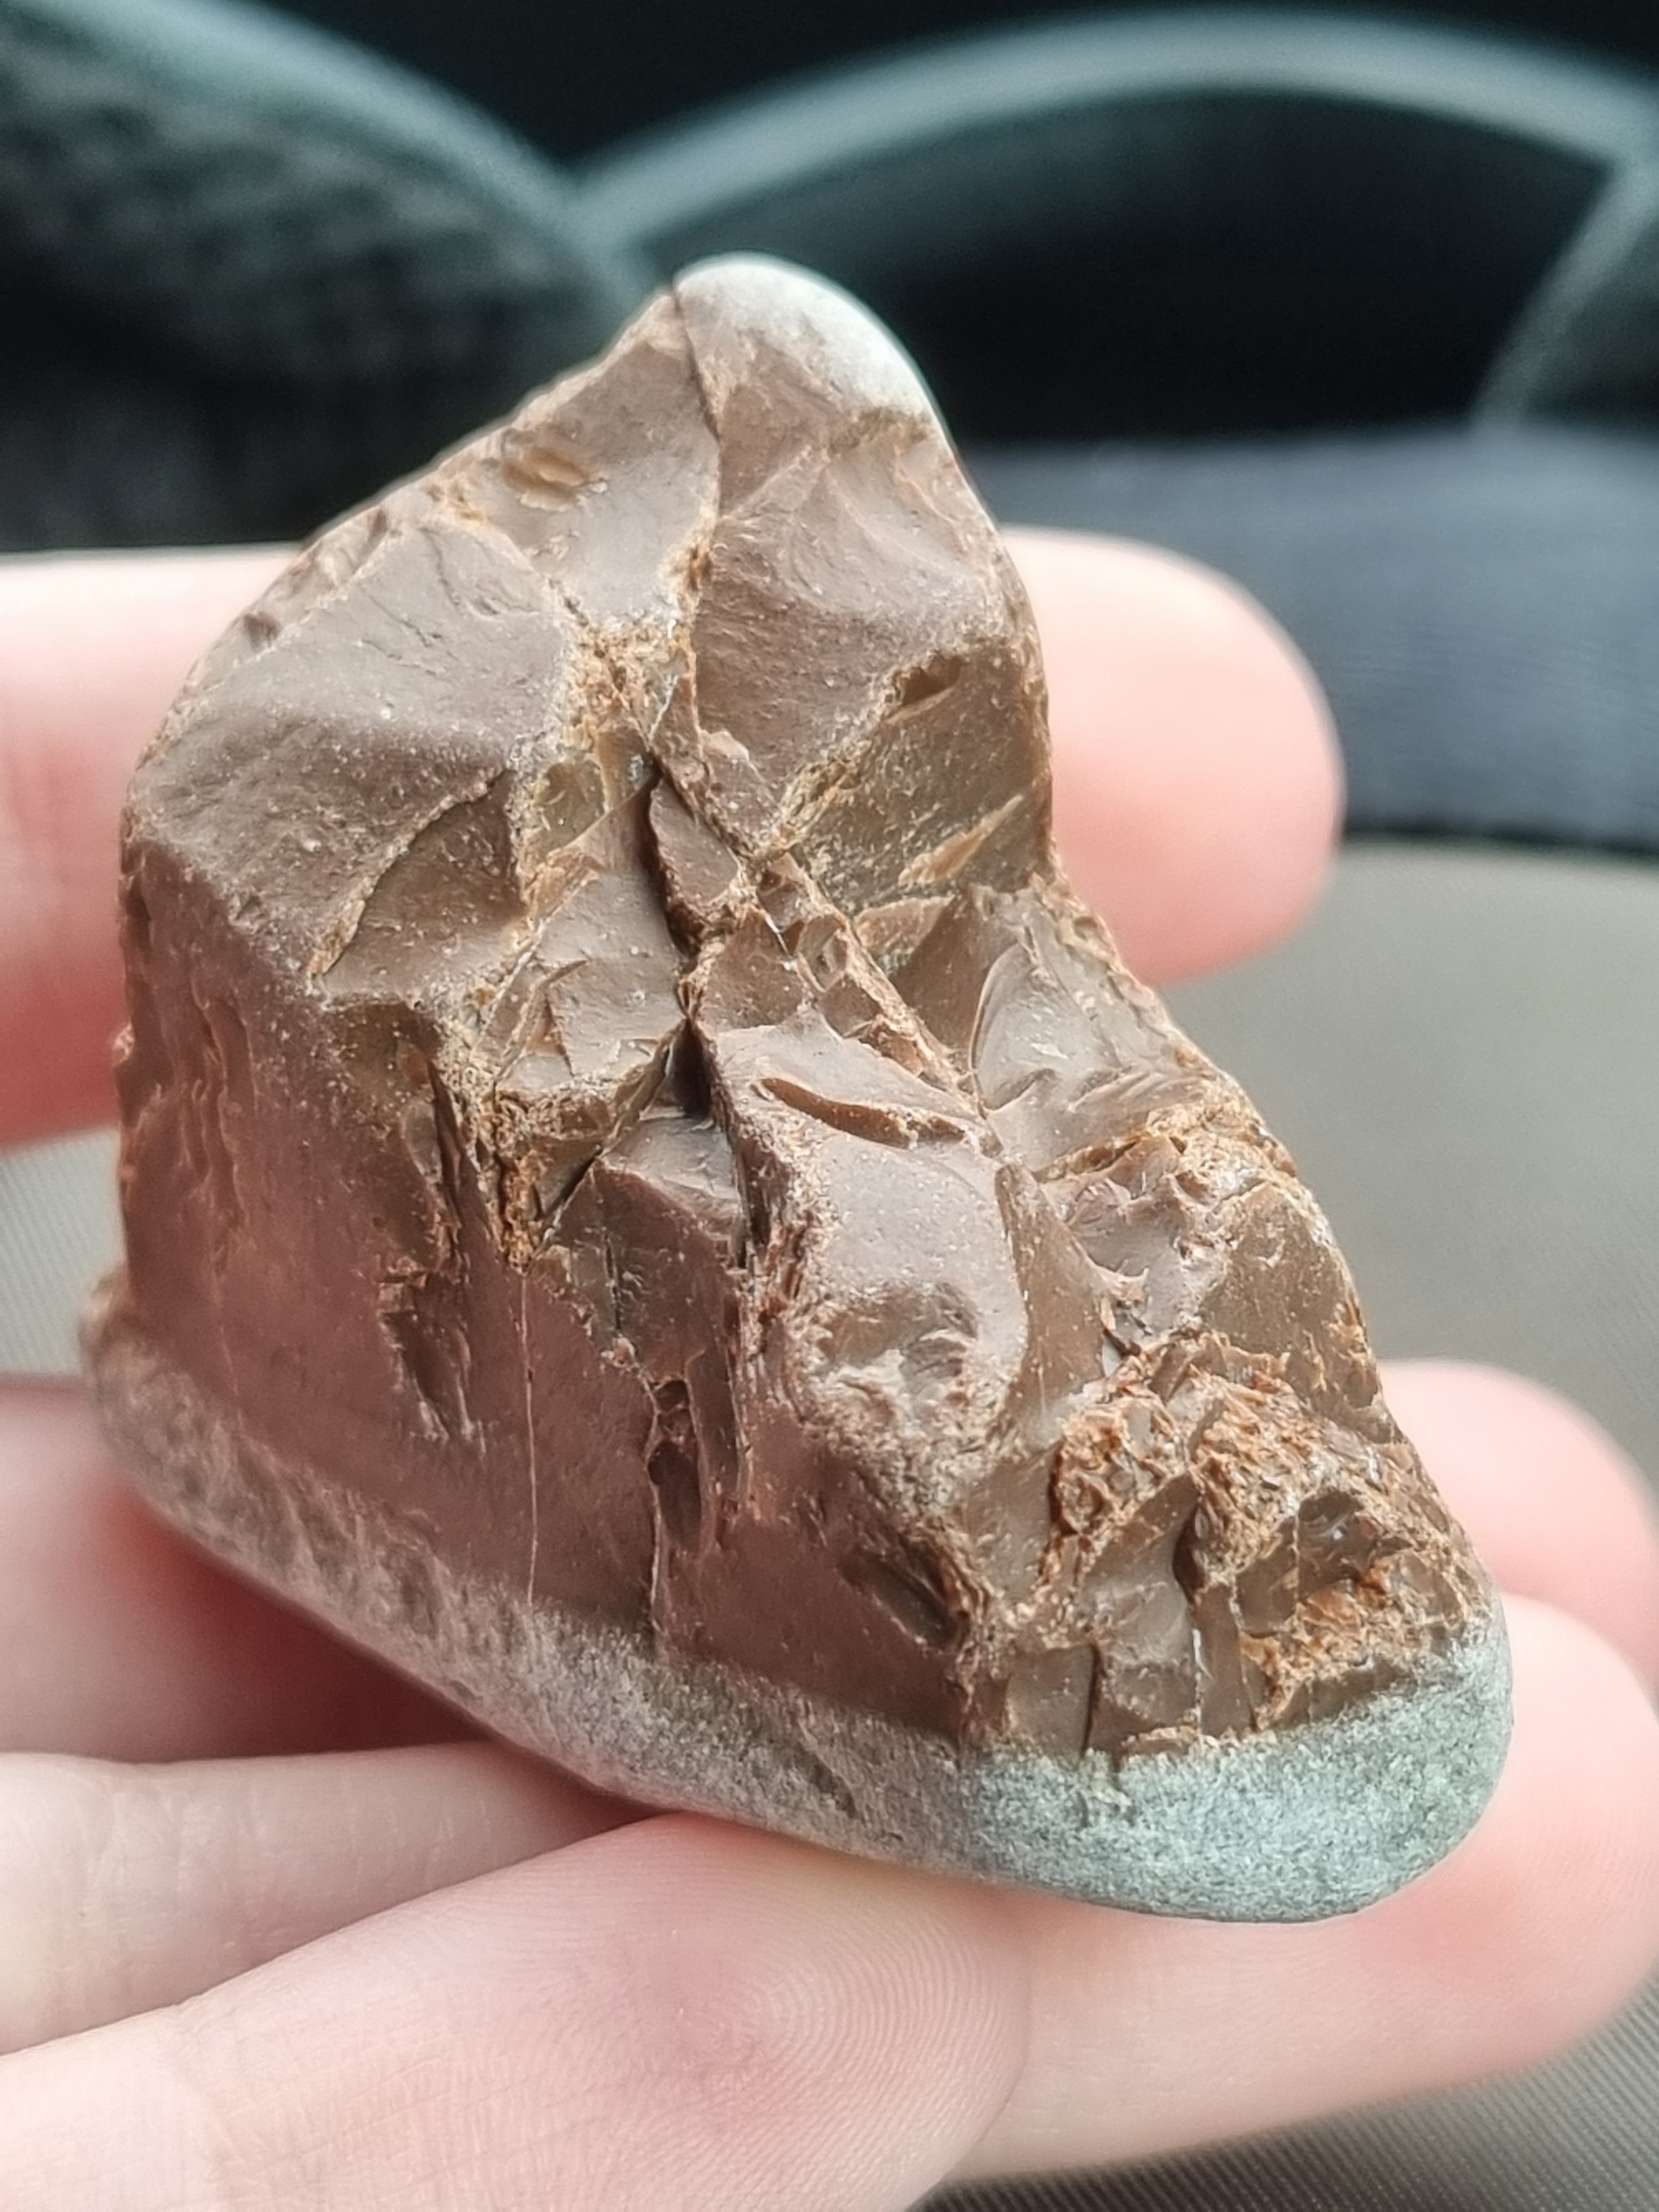 Камень, похожий на шоколад | Пикабу